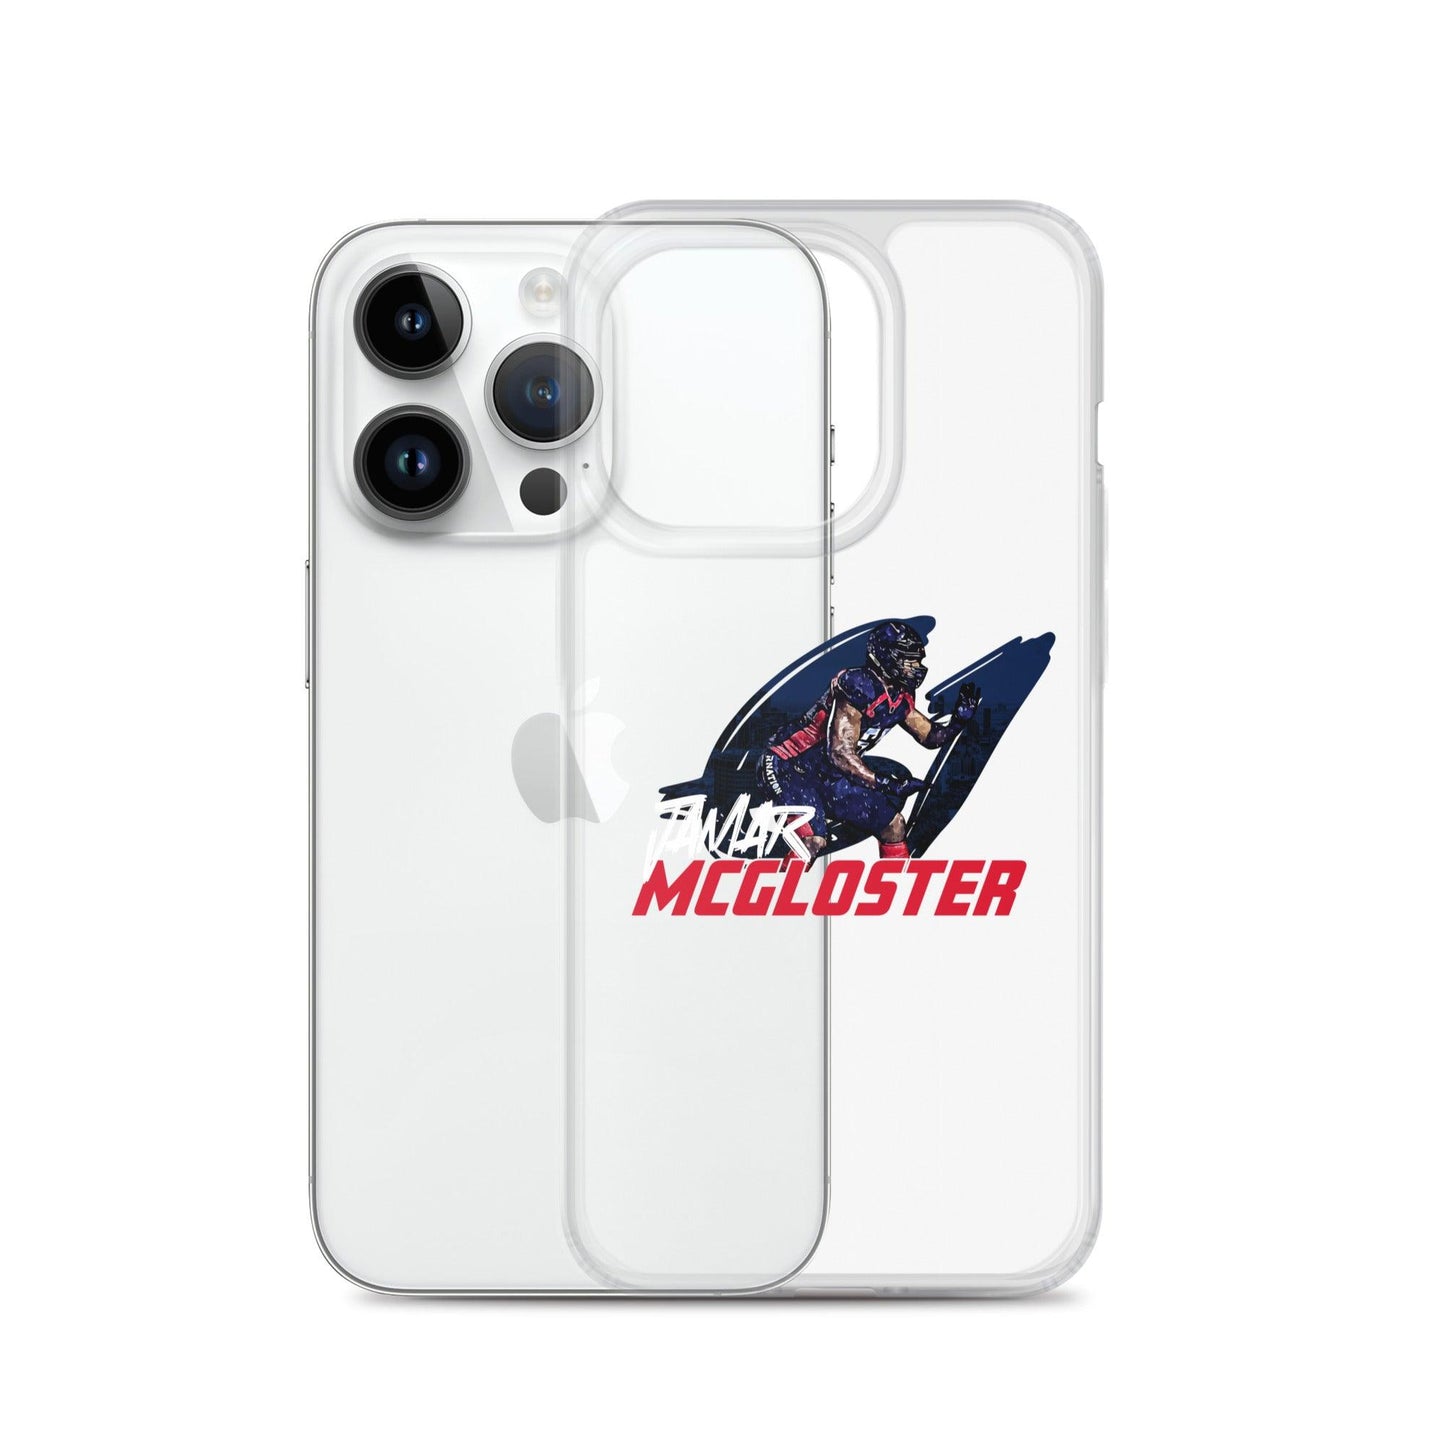 Jamar McGloster "Gameday" iPhone Case - Fan Arch